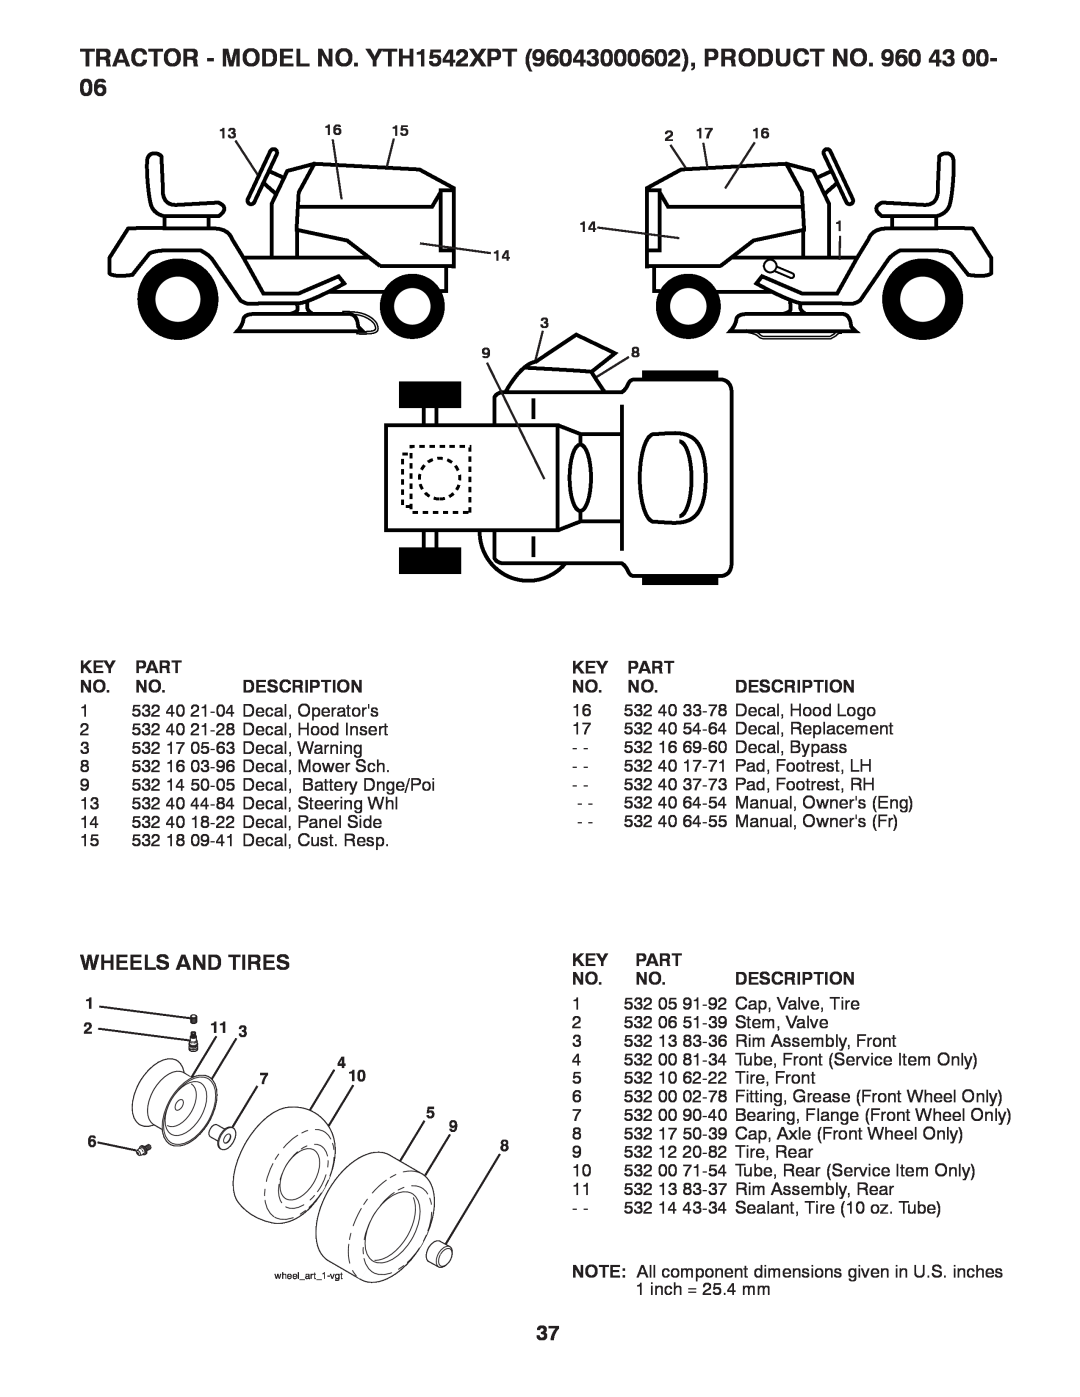 Husqvarna TRACTOR - MODEL NO. YTH1542XPT 96043000602, PRODUCT NO. 960 43 00, Wheels And Tires, Part, Description 